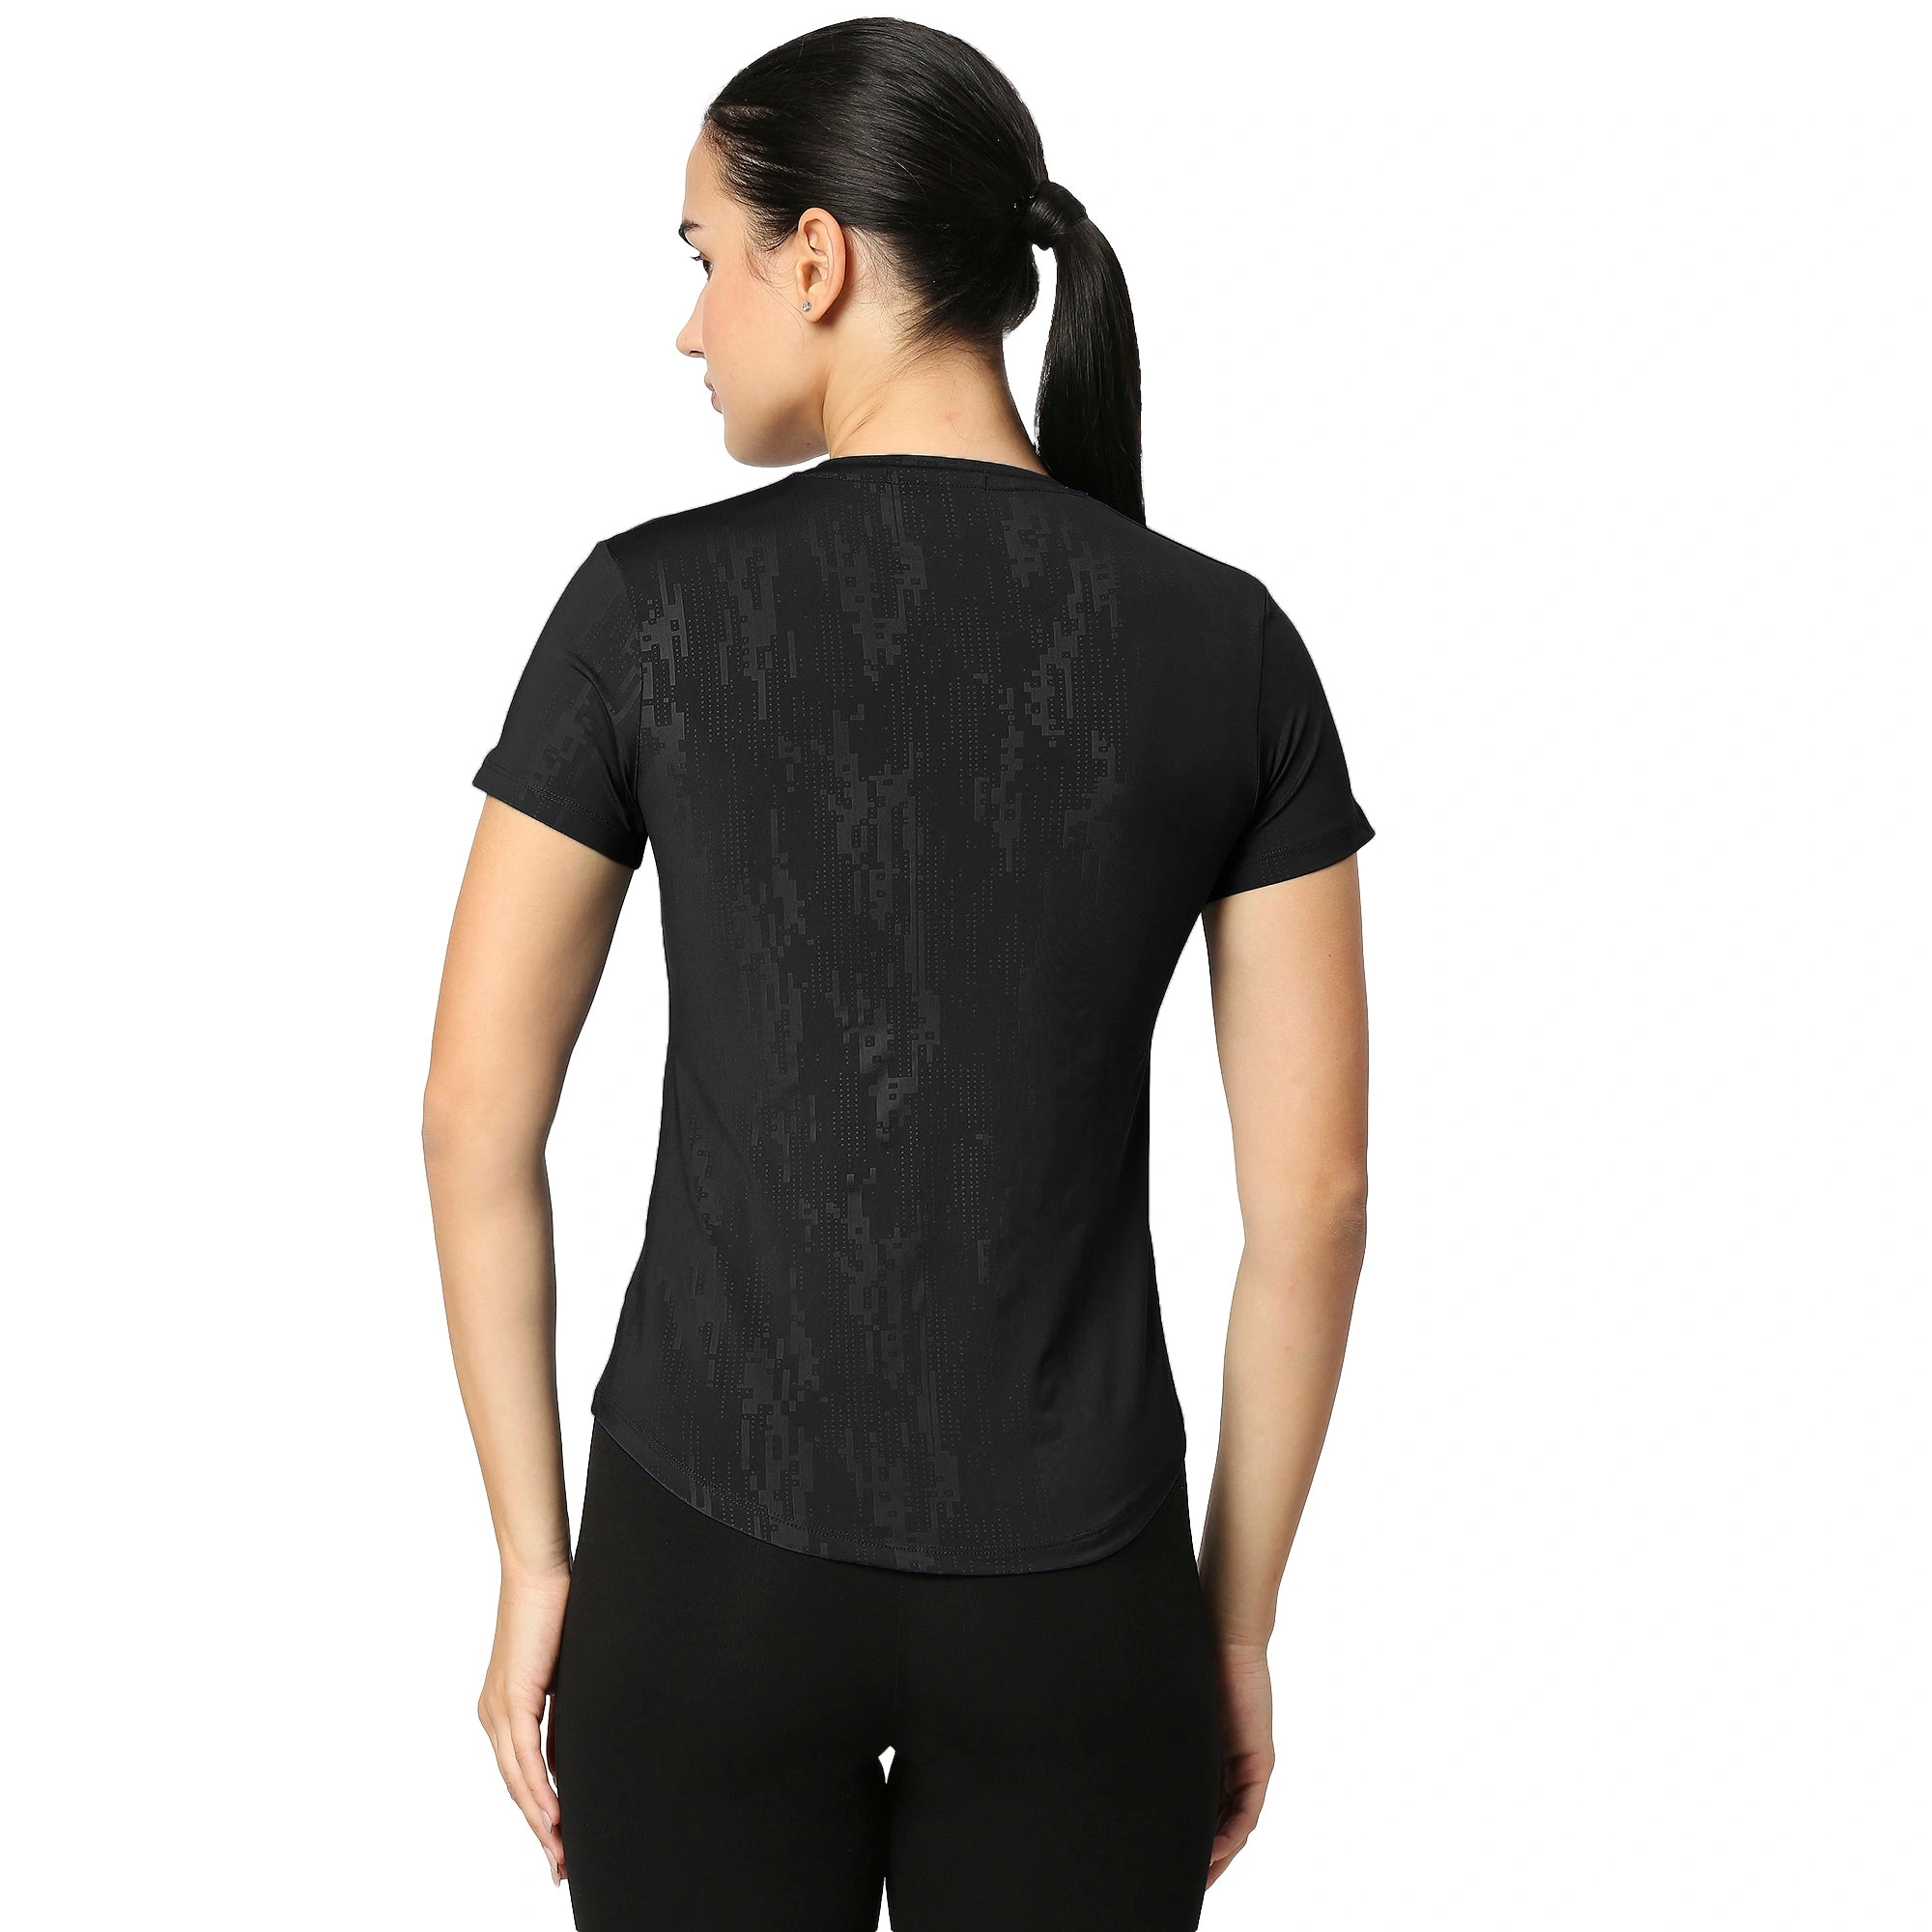 Curved Hem Emboss Print Gym Workout T-Shirt -BLACK-XL-2